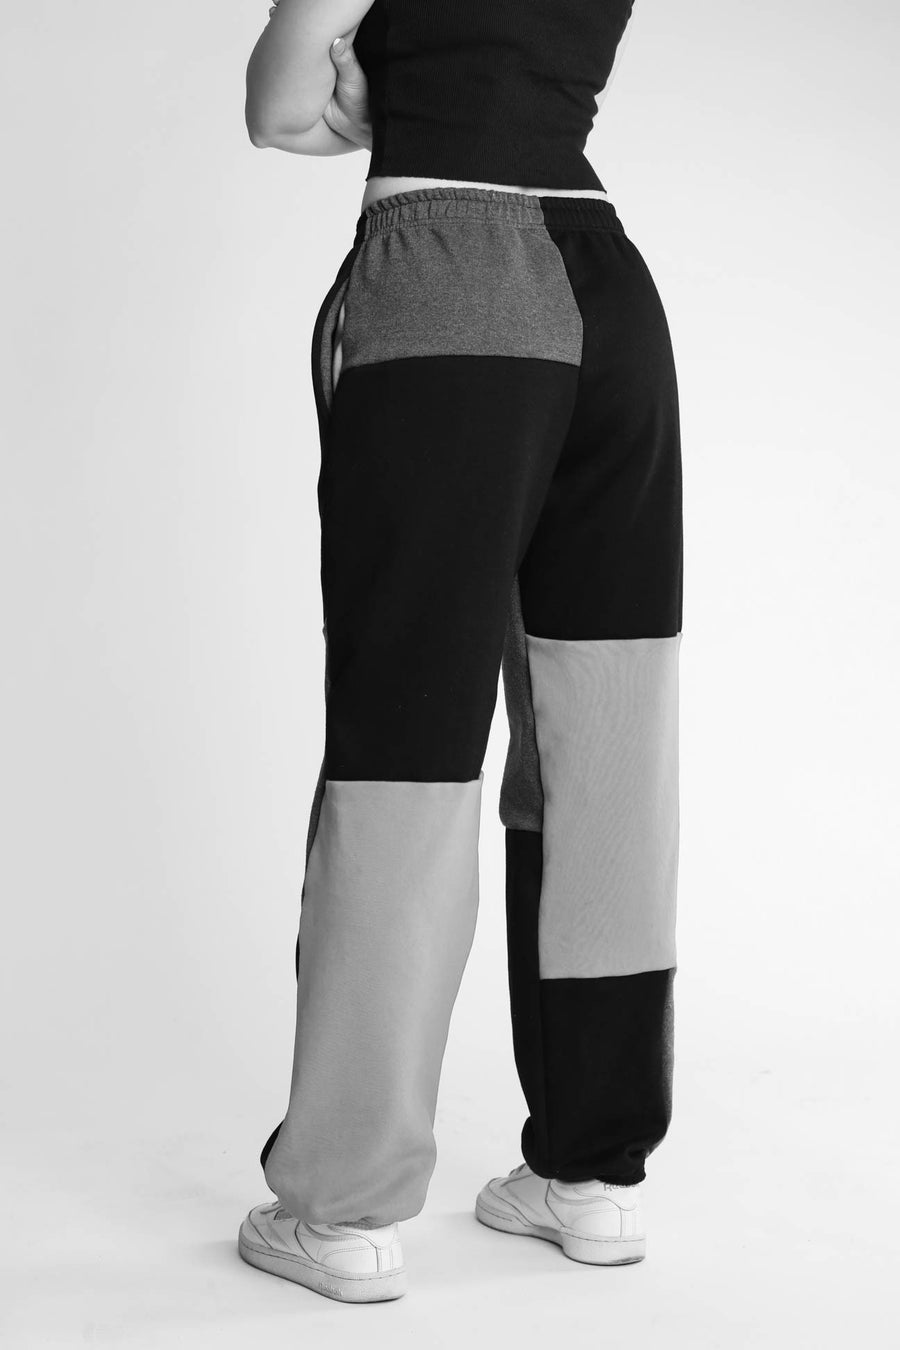 Unisex Rework Nike Patchwork Sweatpants - L